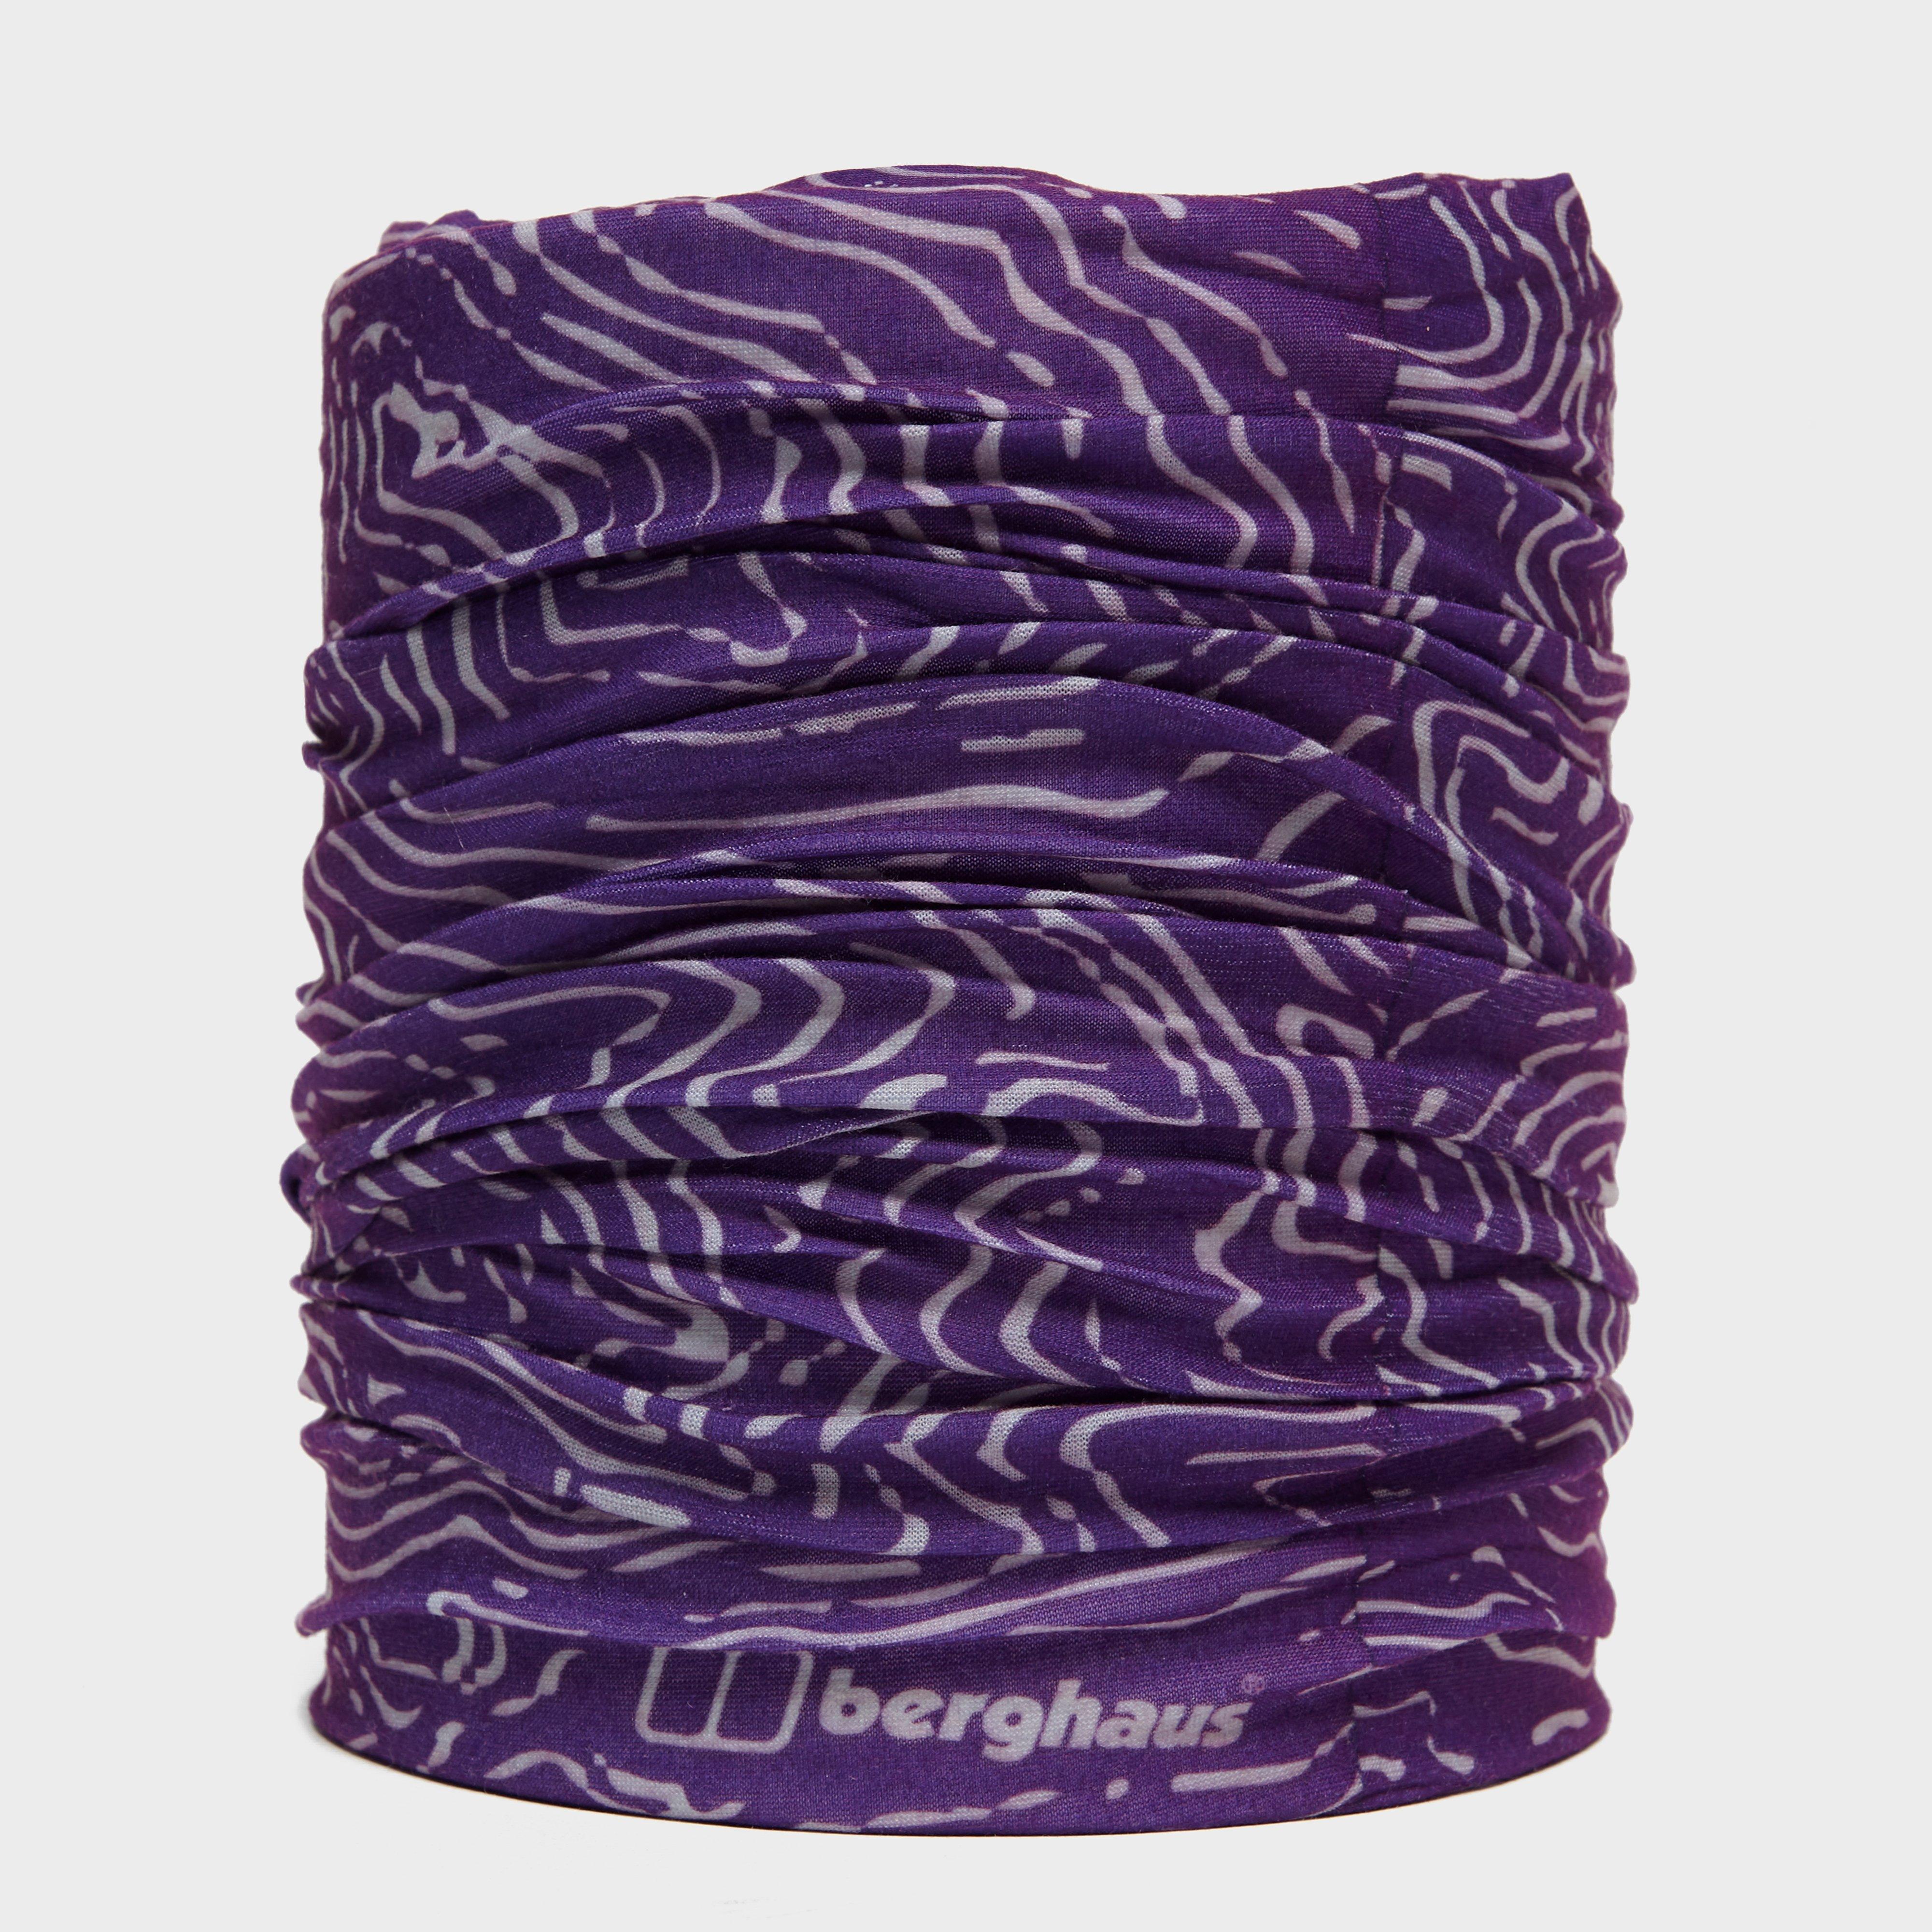 Berghaus Berghaus Unisex Contour Neck Gaiter - Purple, Purple